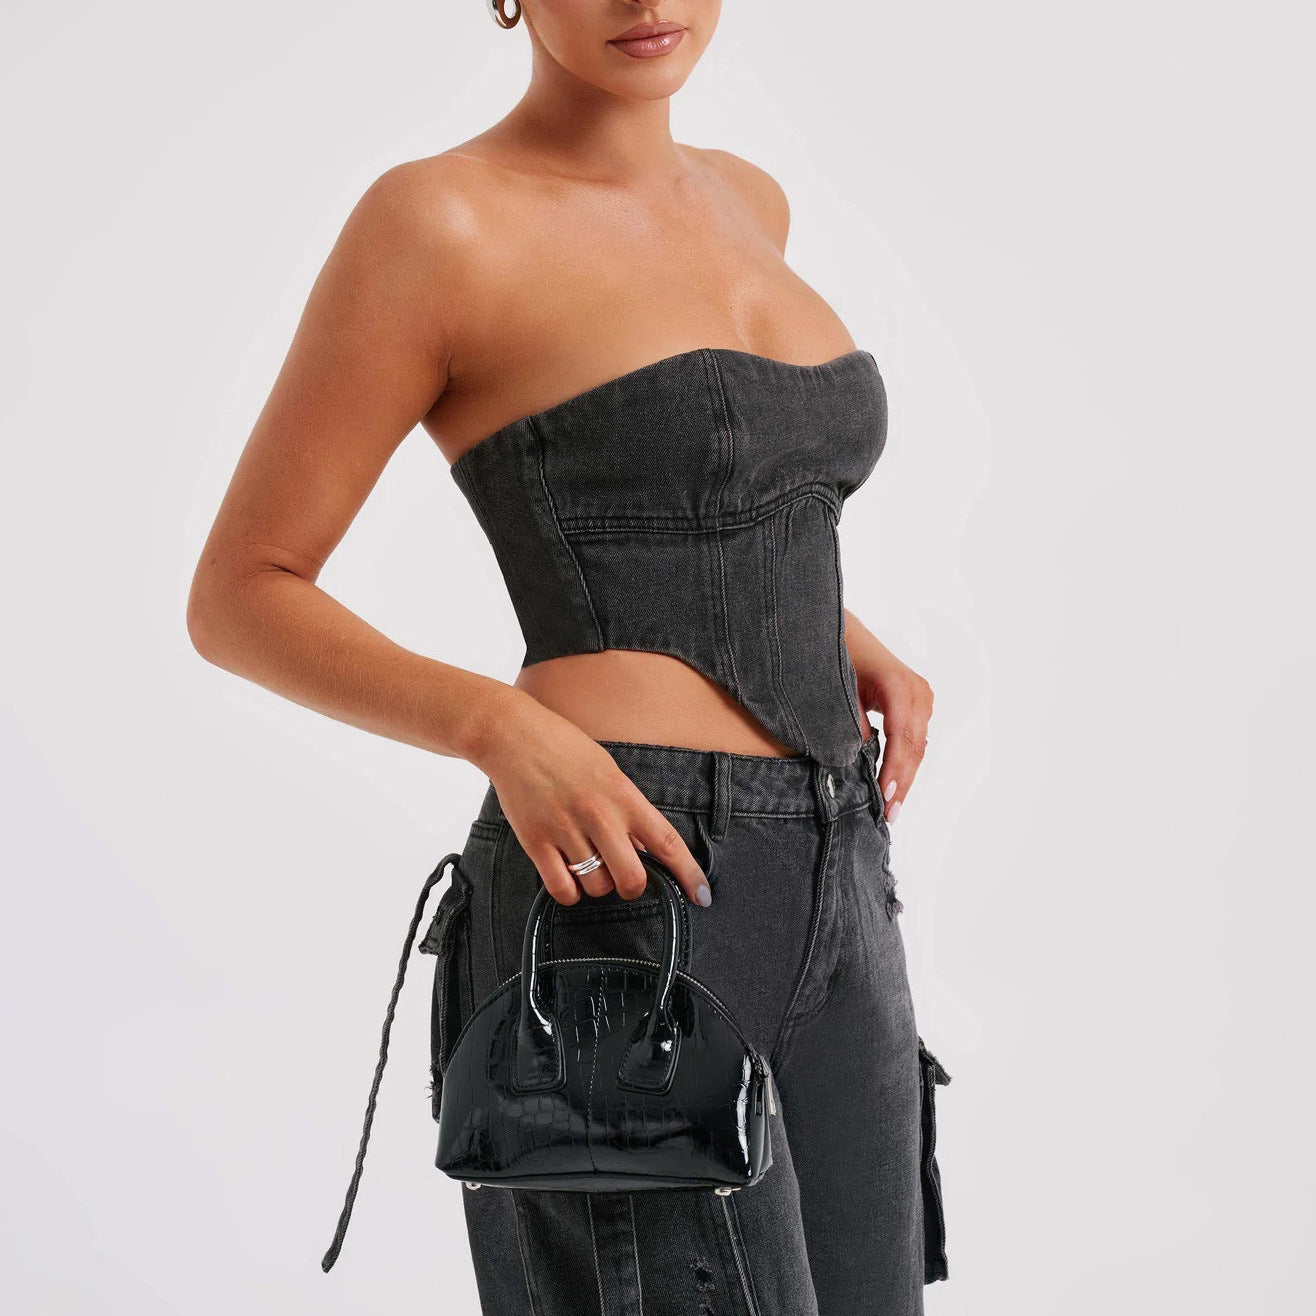 Black Vest - Women's American-style Low Waist 3D Pocket Stitching Jeans, Vest, or Outfit Set - womens jeans at TFC&H Co.